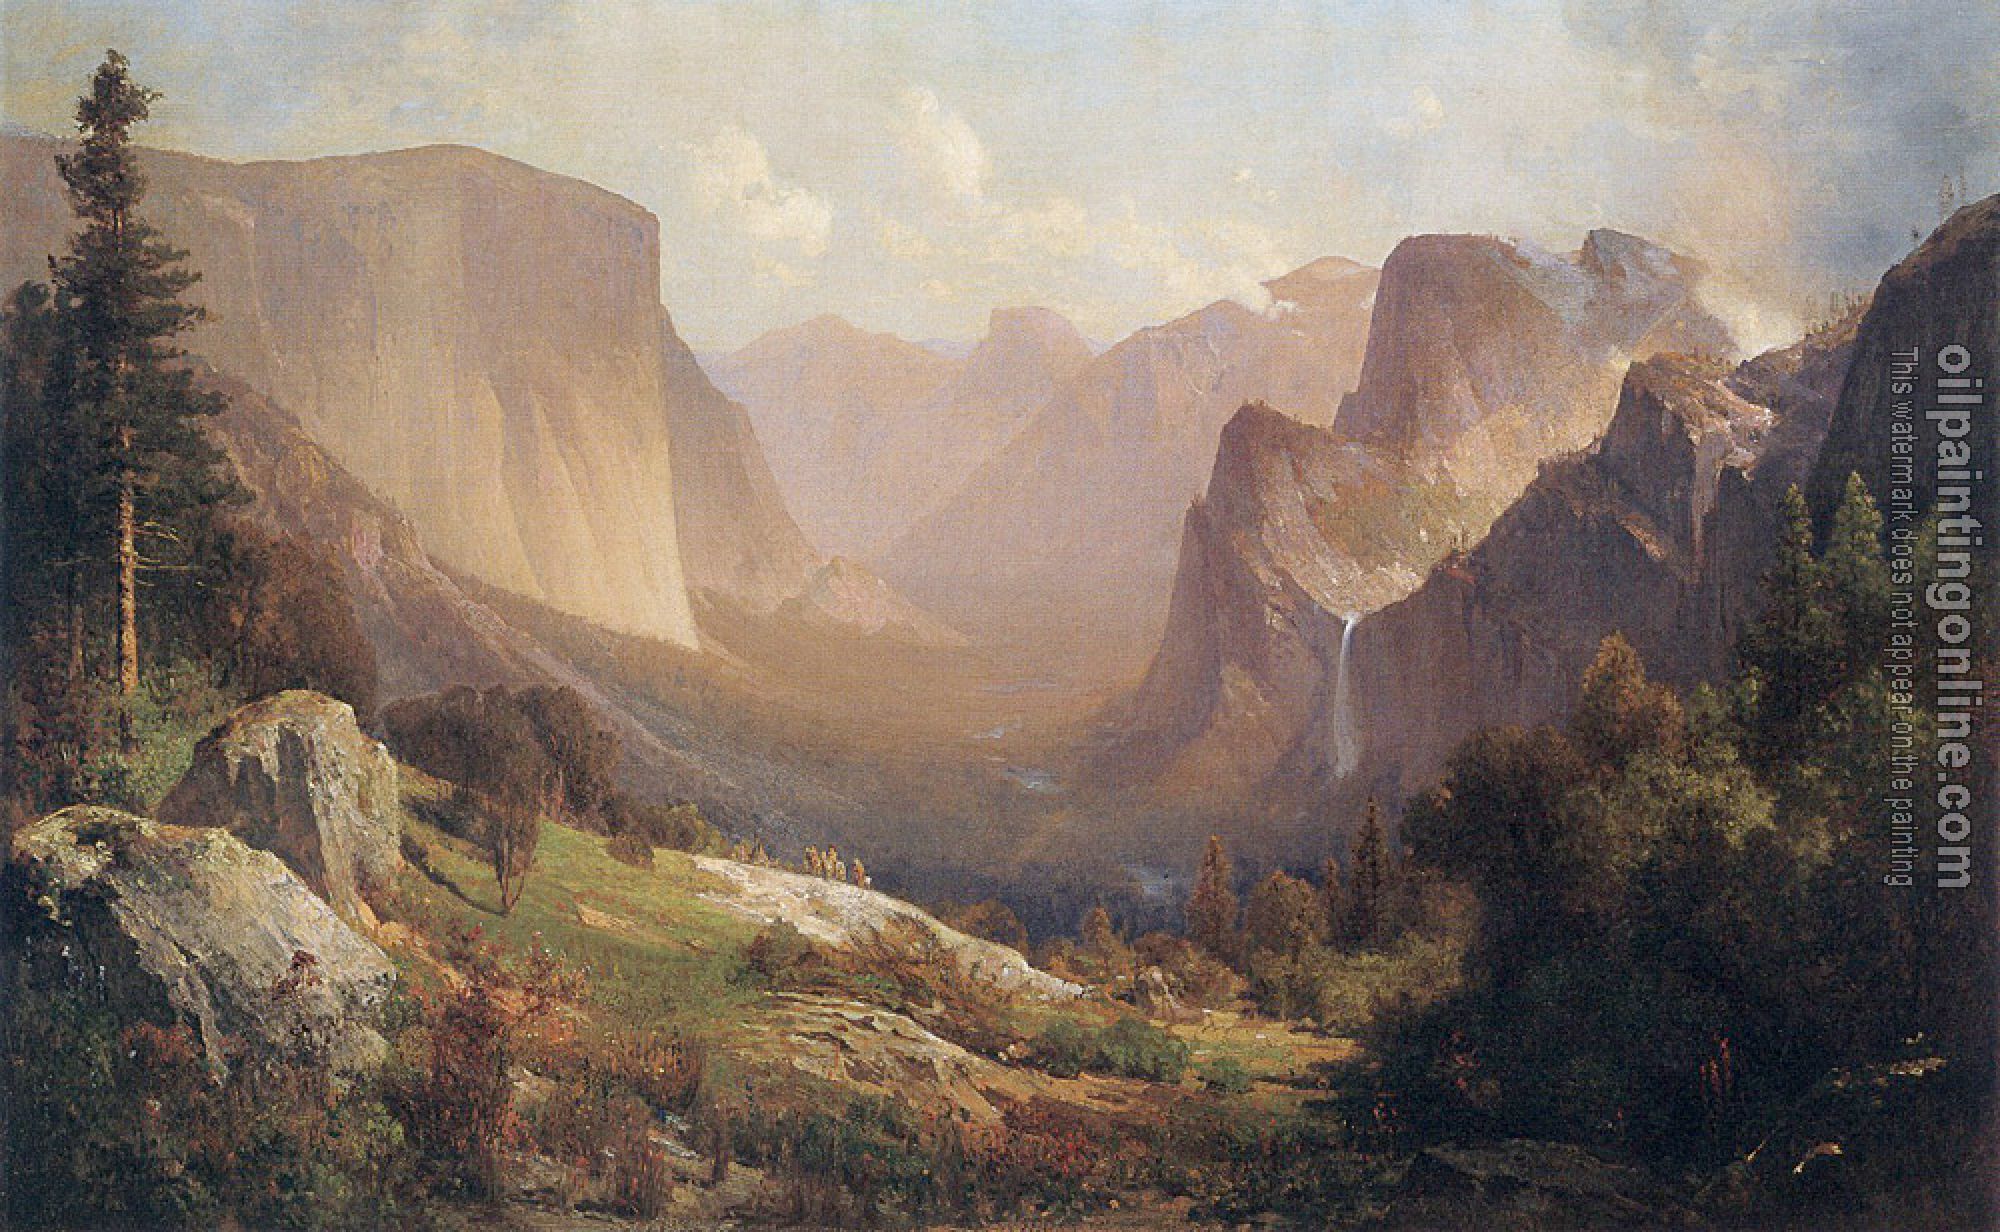 Thomas Hill - View of Yosemite Valley